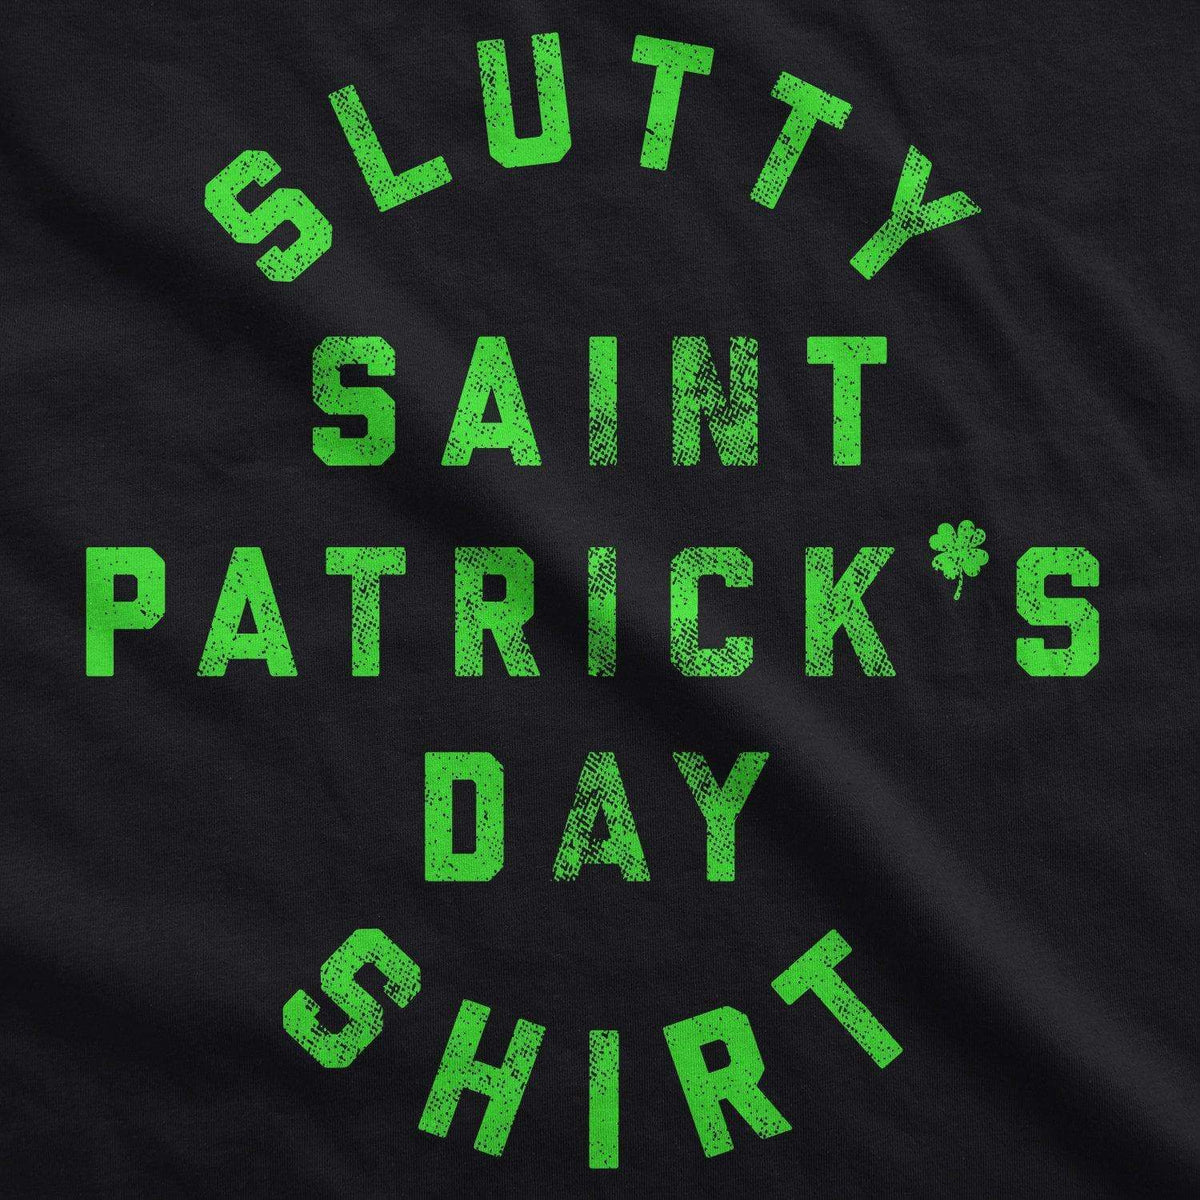 Slutty St. Patrick&#39;s Day Shirt Women&#39;s Tank Top  -  Crazy Dog T-Shirts